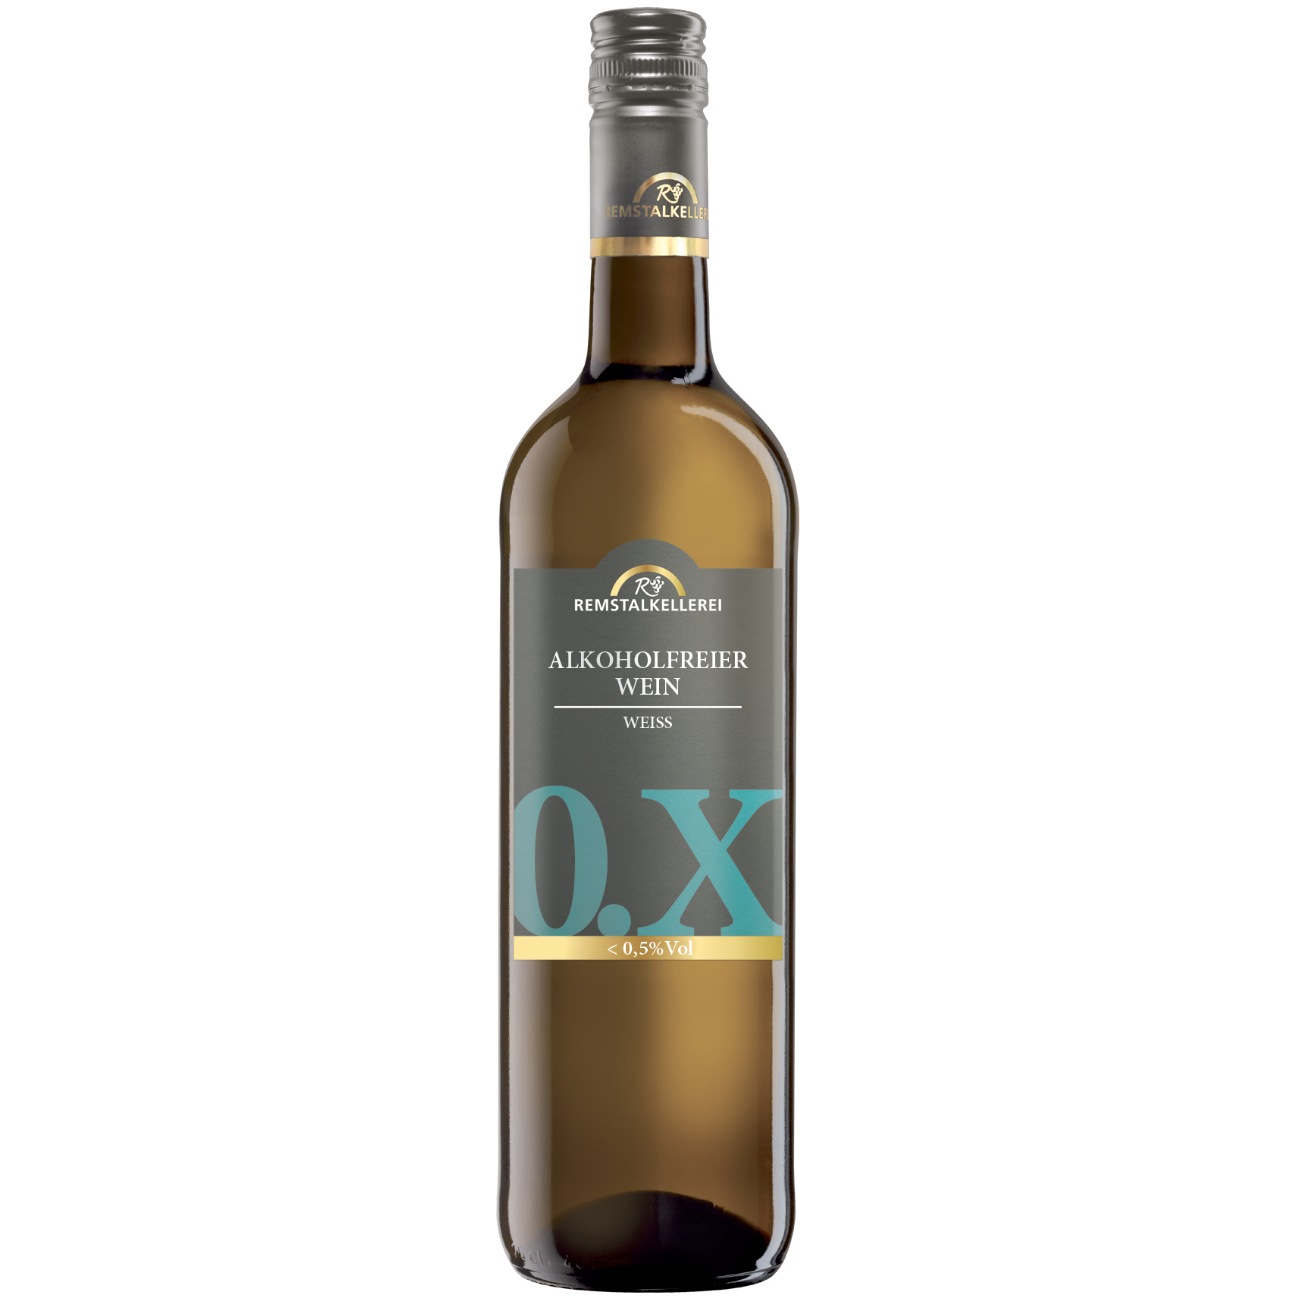 0.X Alkoholfreier Wein Weiss 0,75 L - Remstalkellerei